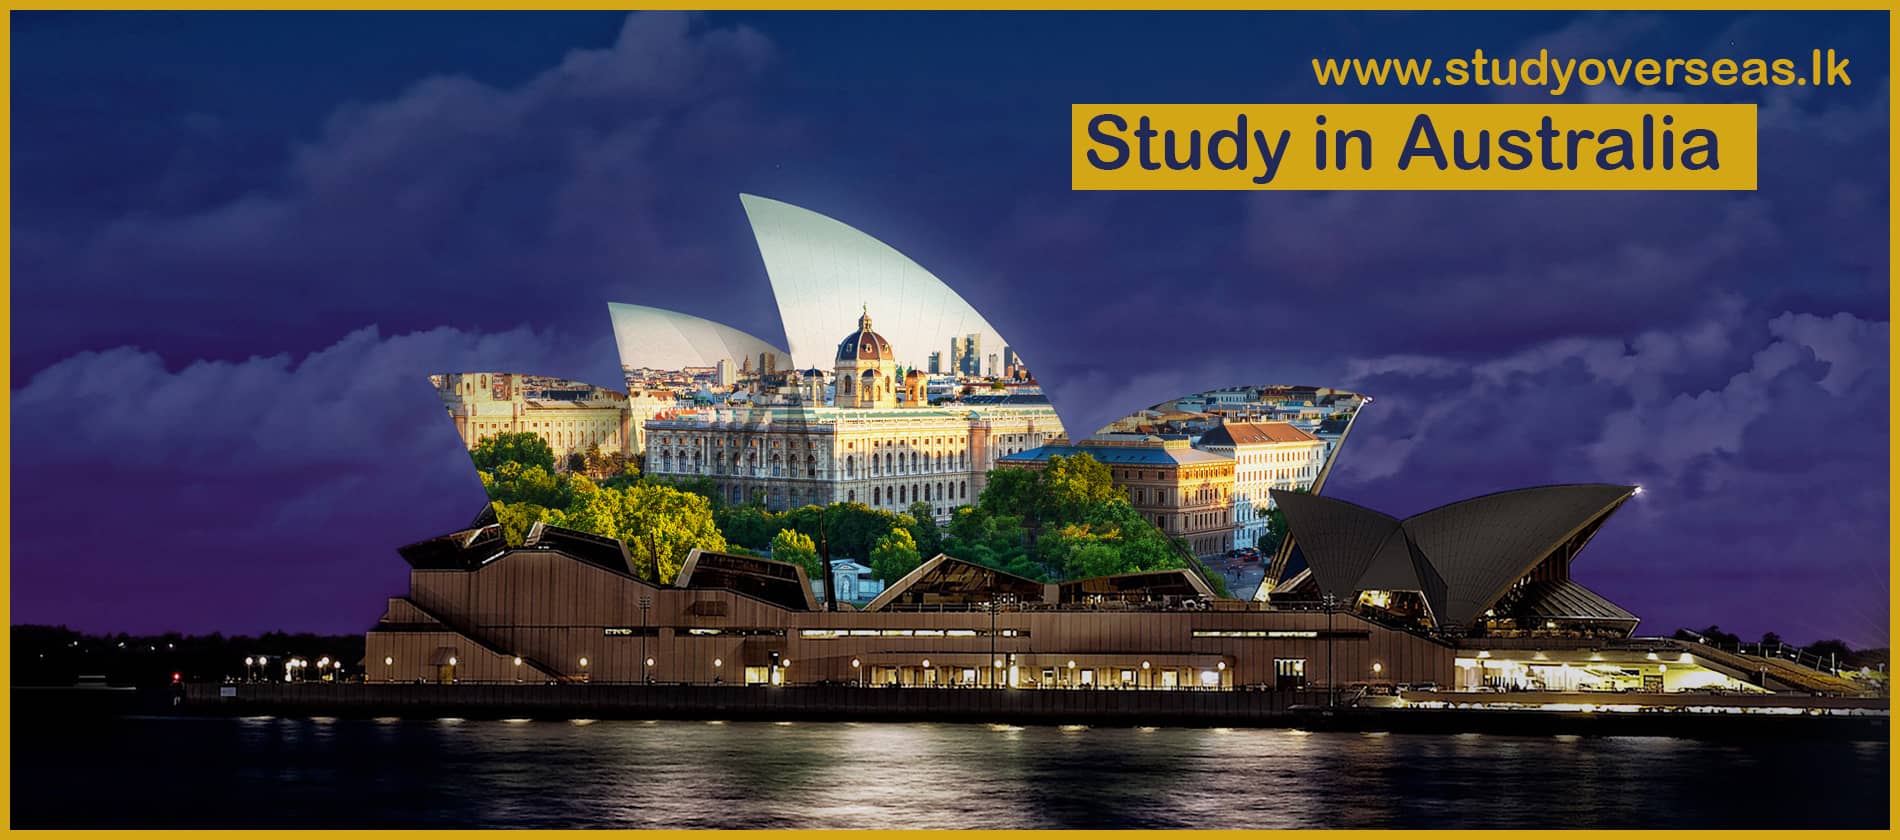 study_in_australia_sydney_www.studyoverseas.lk